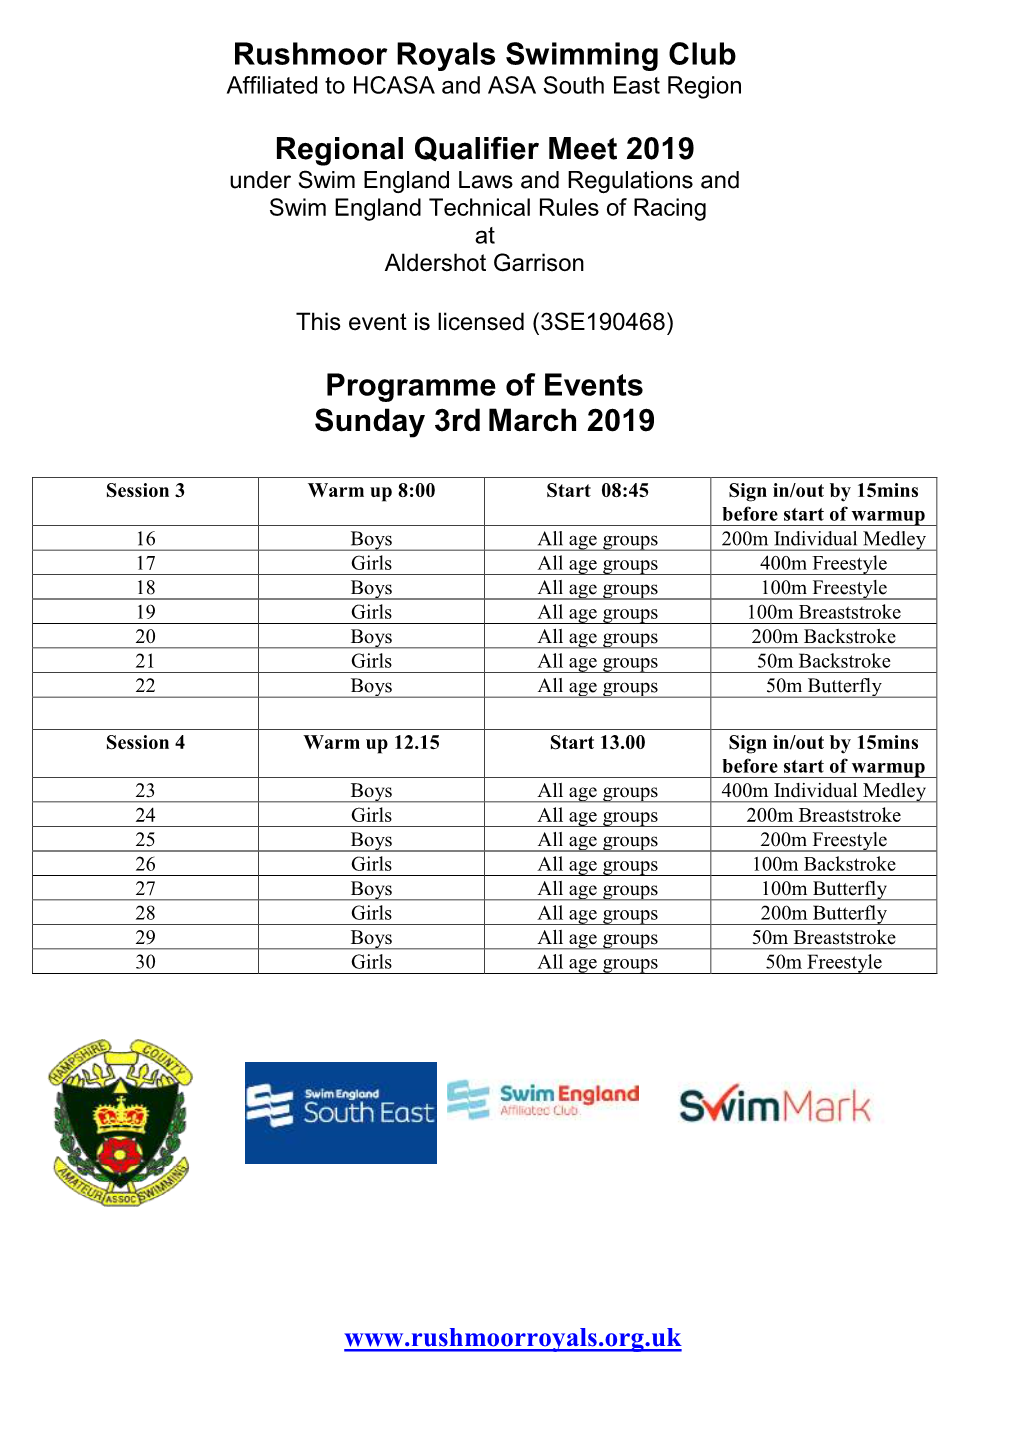 Rushmoor Royals Swimming Club Regional Qualifier